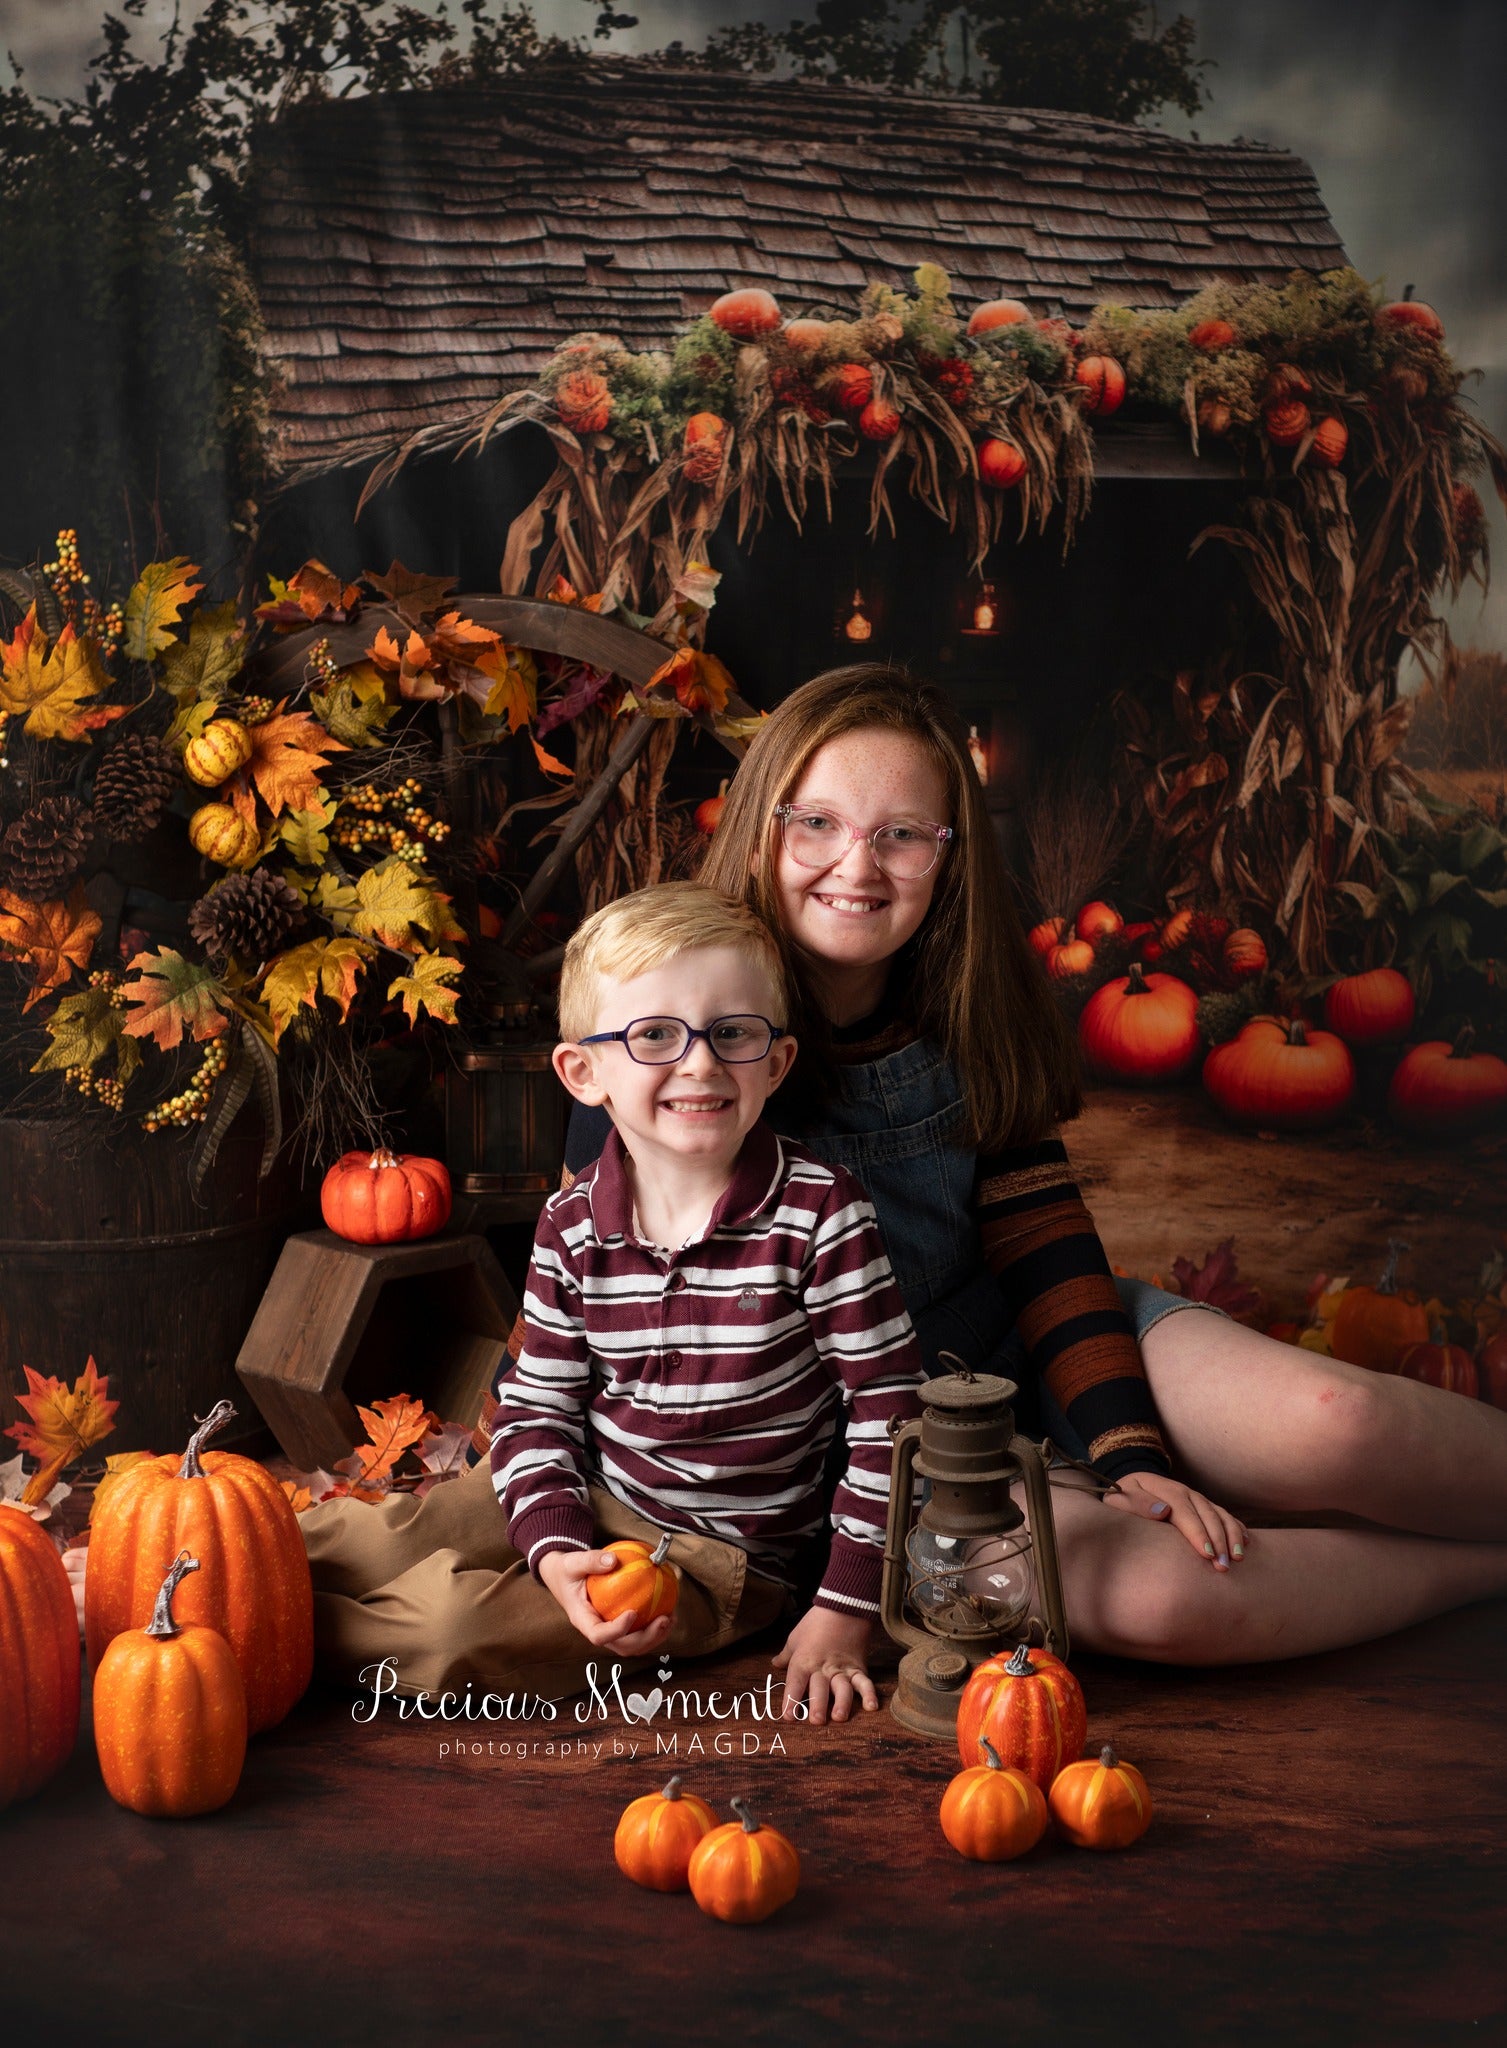 Kate Farm Pumpkin Harvest Backdrop for Photography